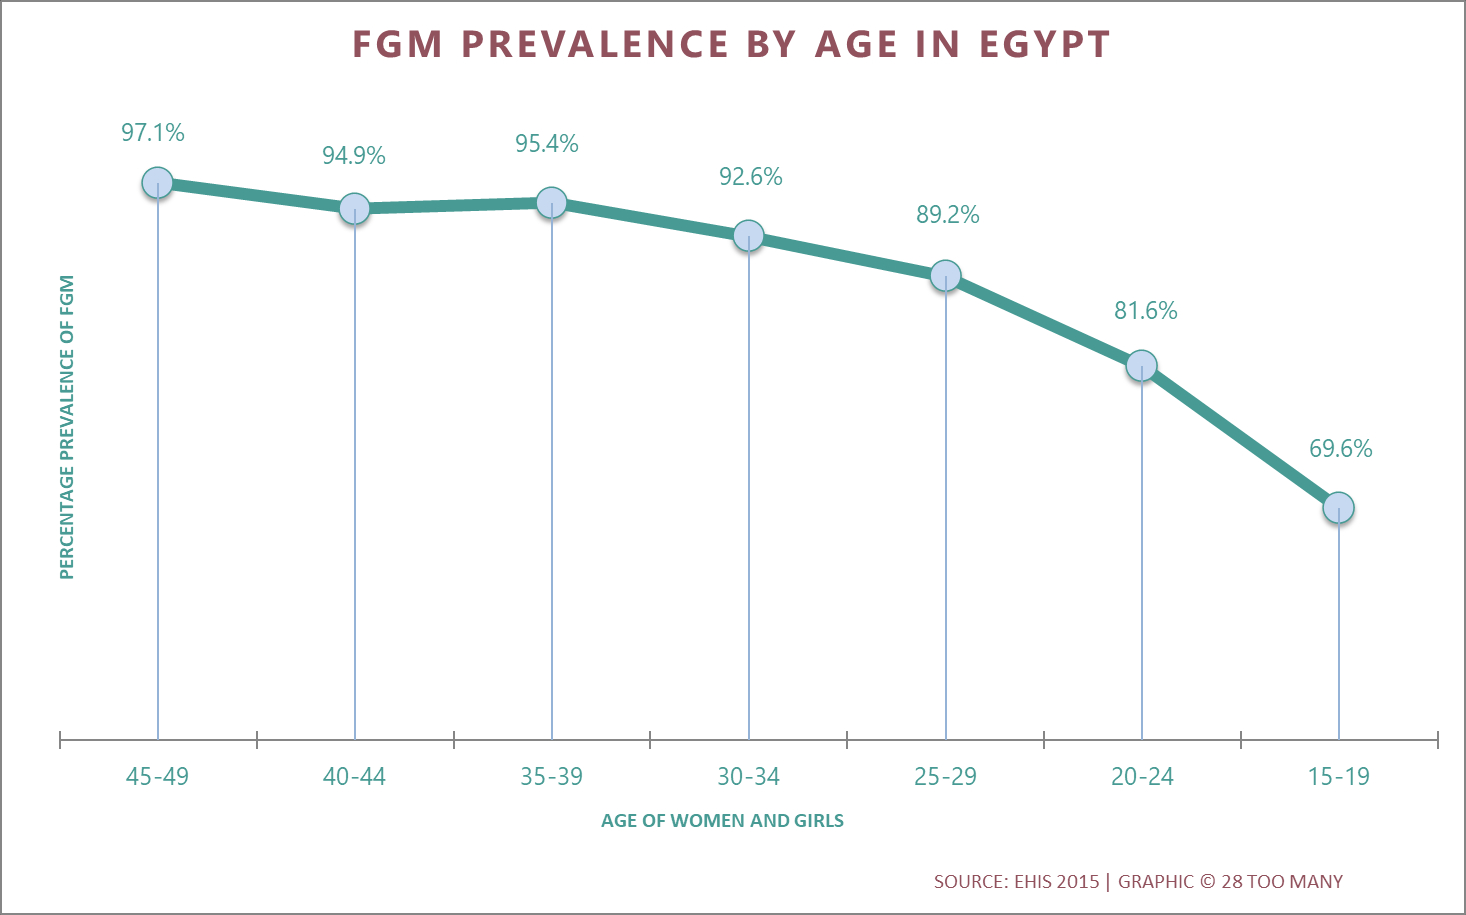 Trends in FGM/C Prevalence in Egypt